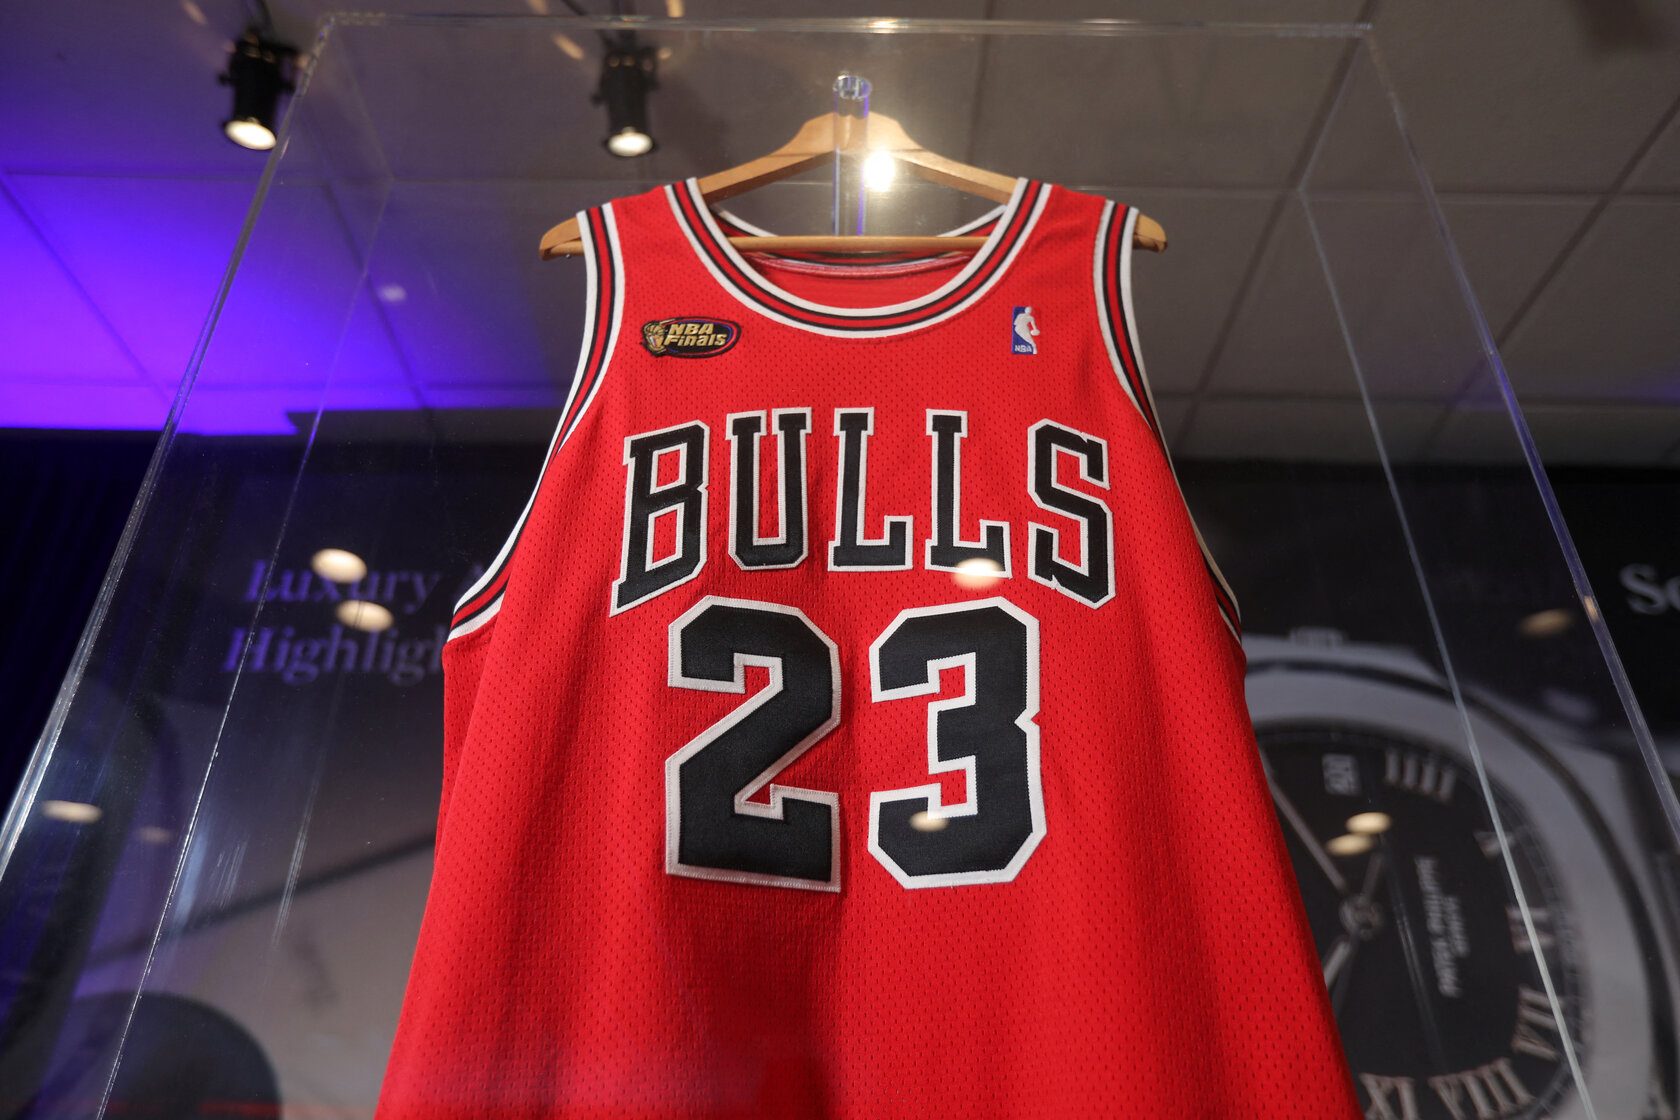 Jordan's 'Last Dance' jersey sells for record $10.1 million